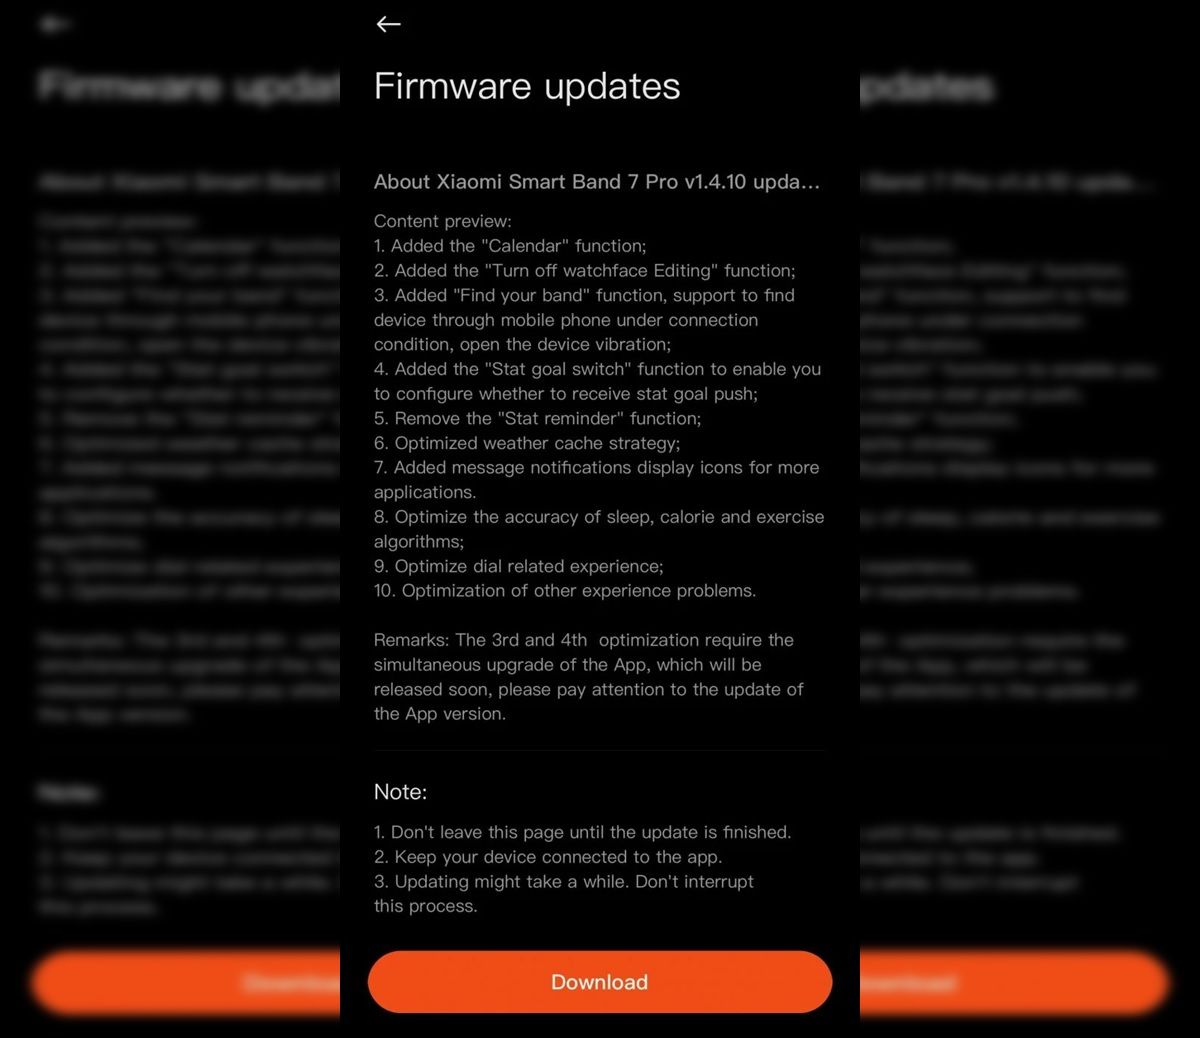 Xiaomi Smart Band 7 Pro firmware version 1.4.70